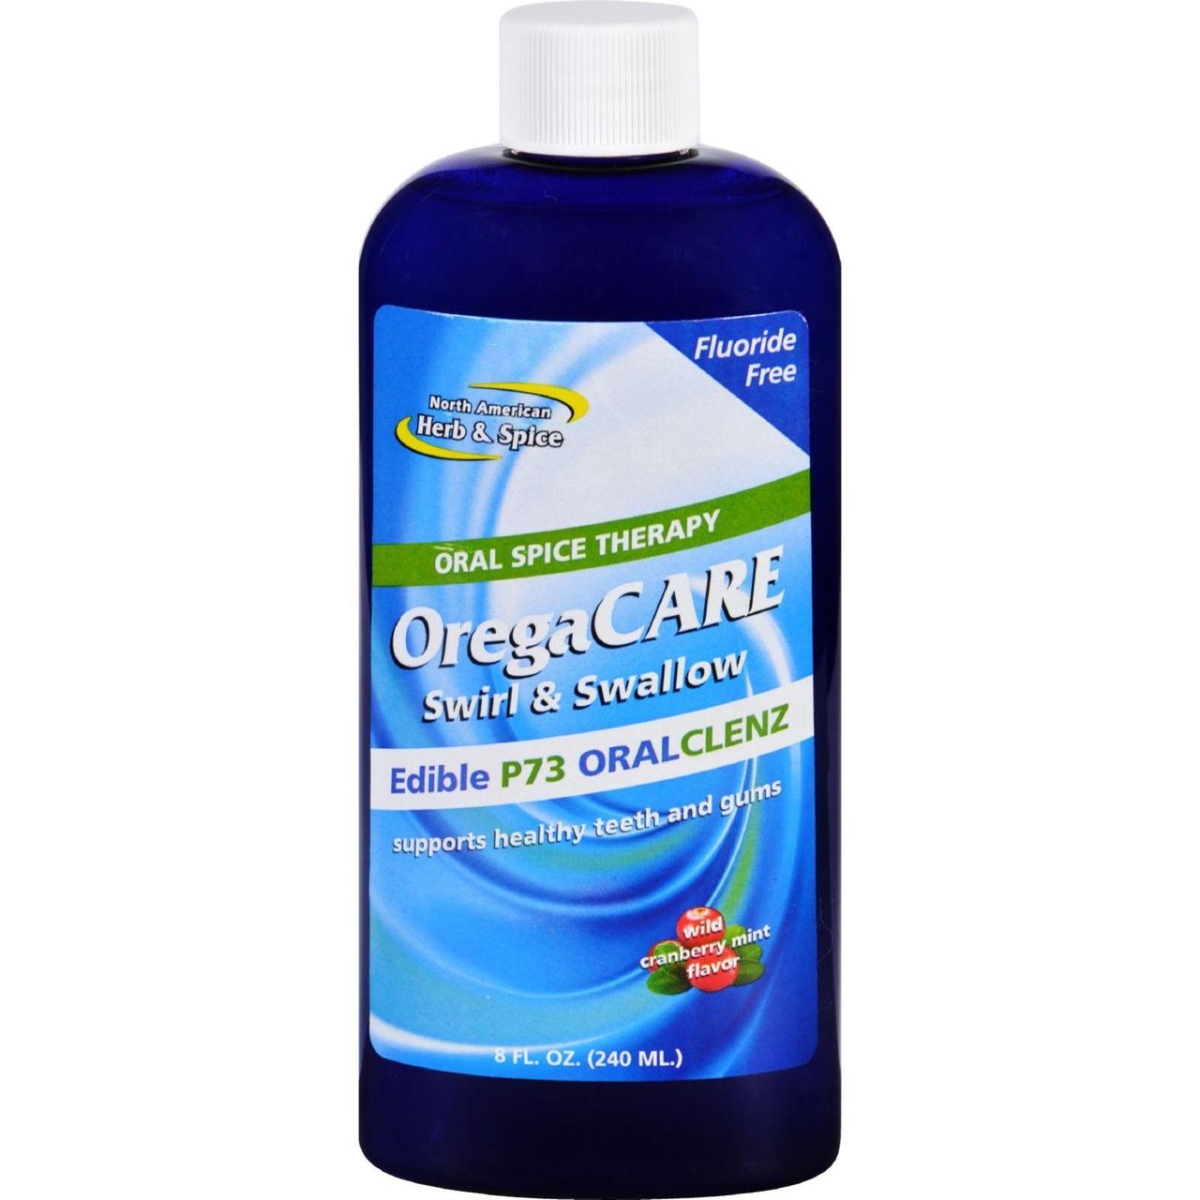 Hg1528538 8 Oz Oregacare Swirl & Swallow Oral Cleanser